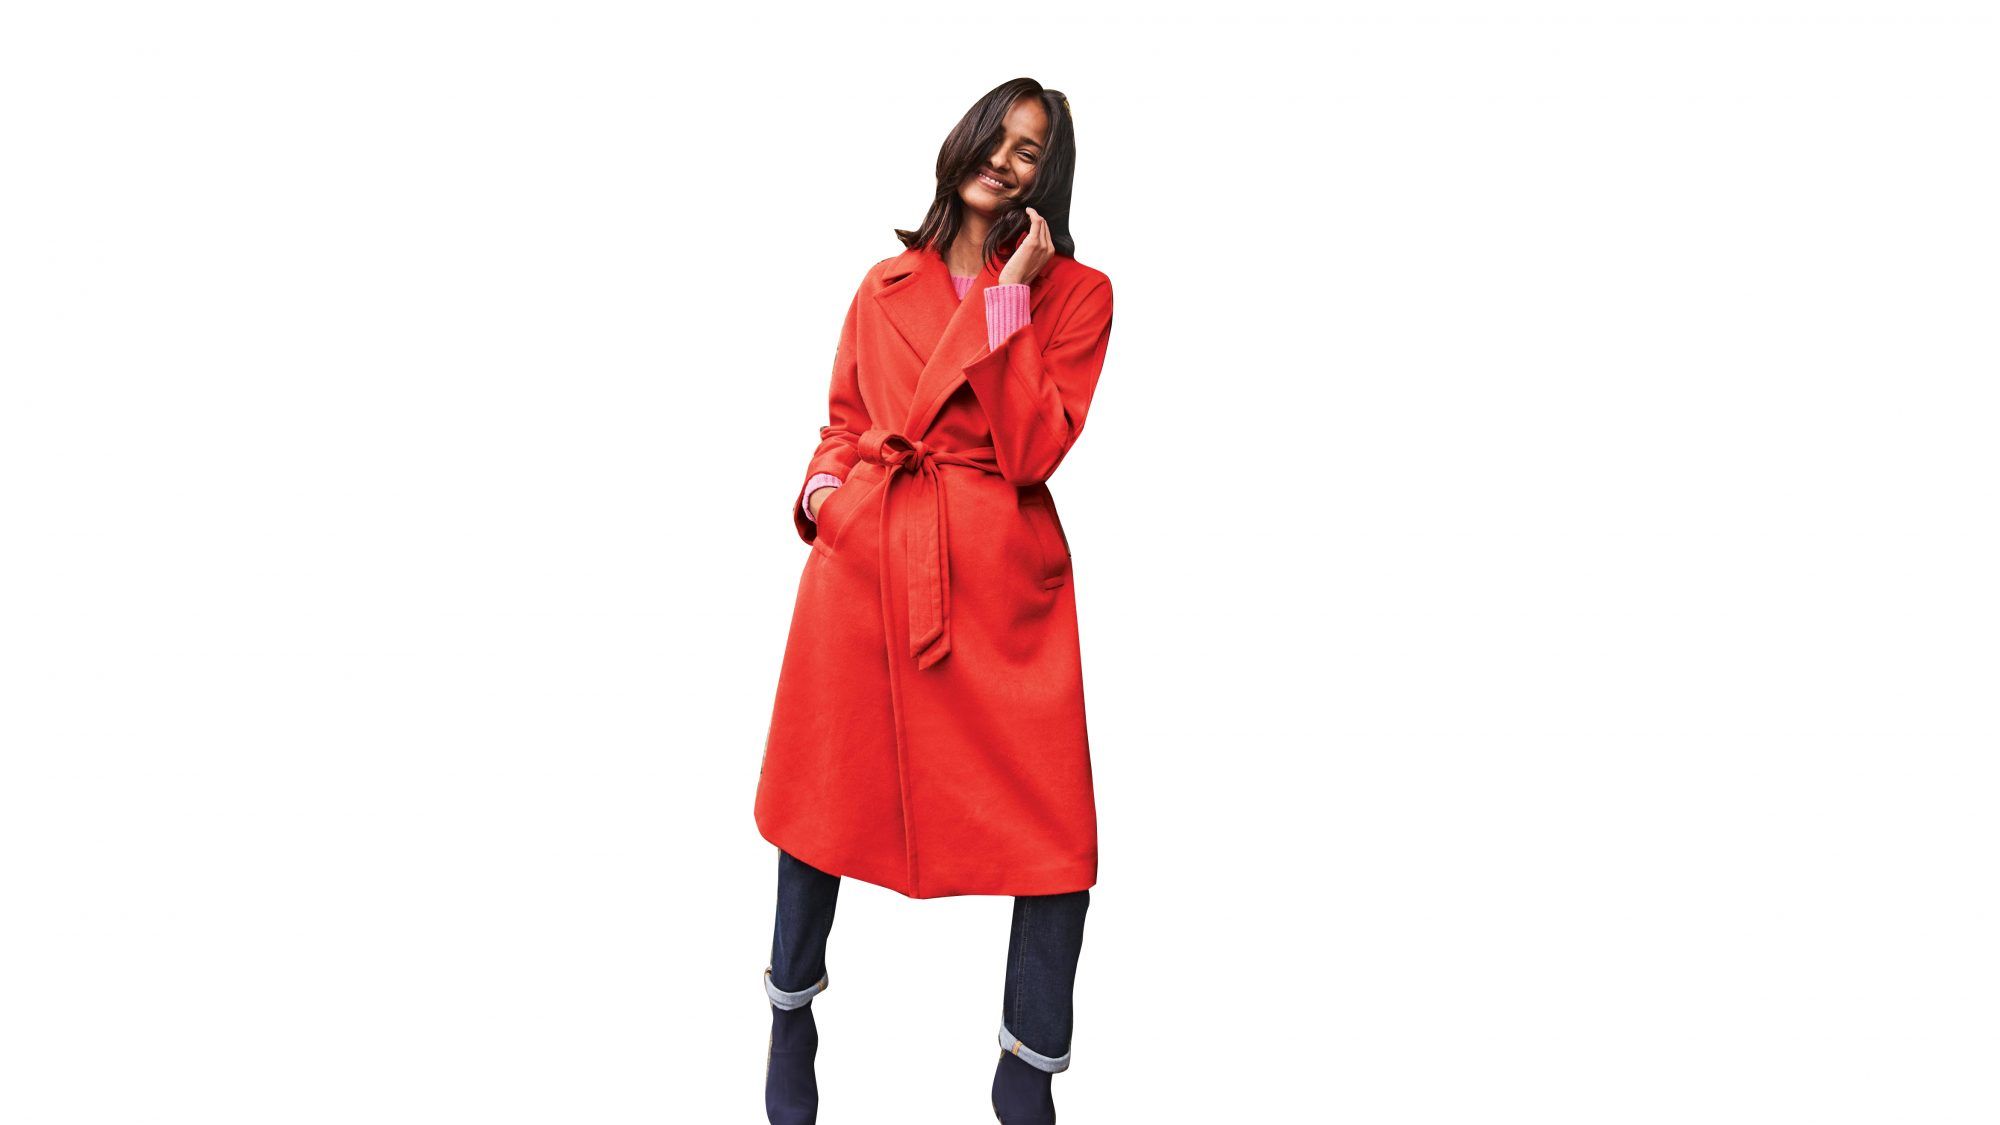 5 audaci cappotti rossi ispirati all'ultimo look di Meghan Markle